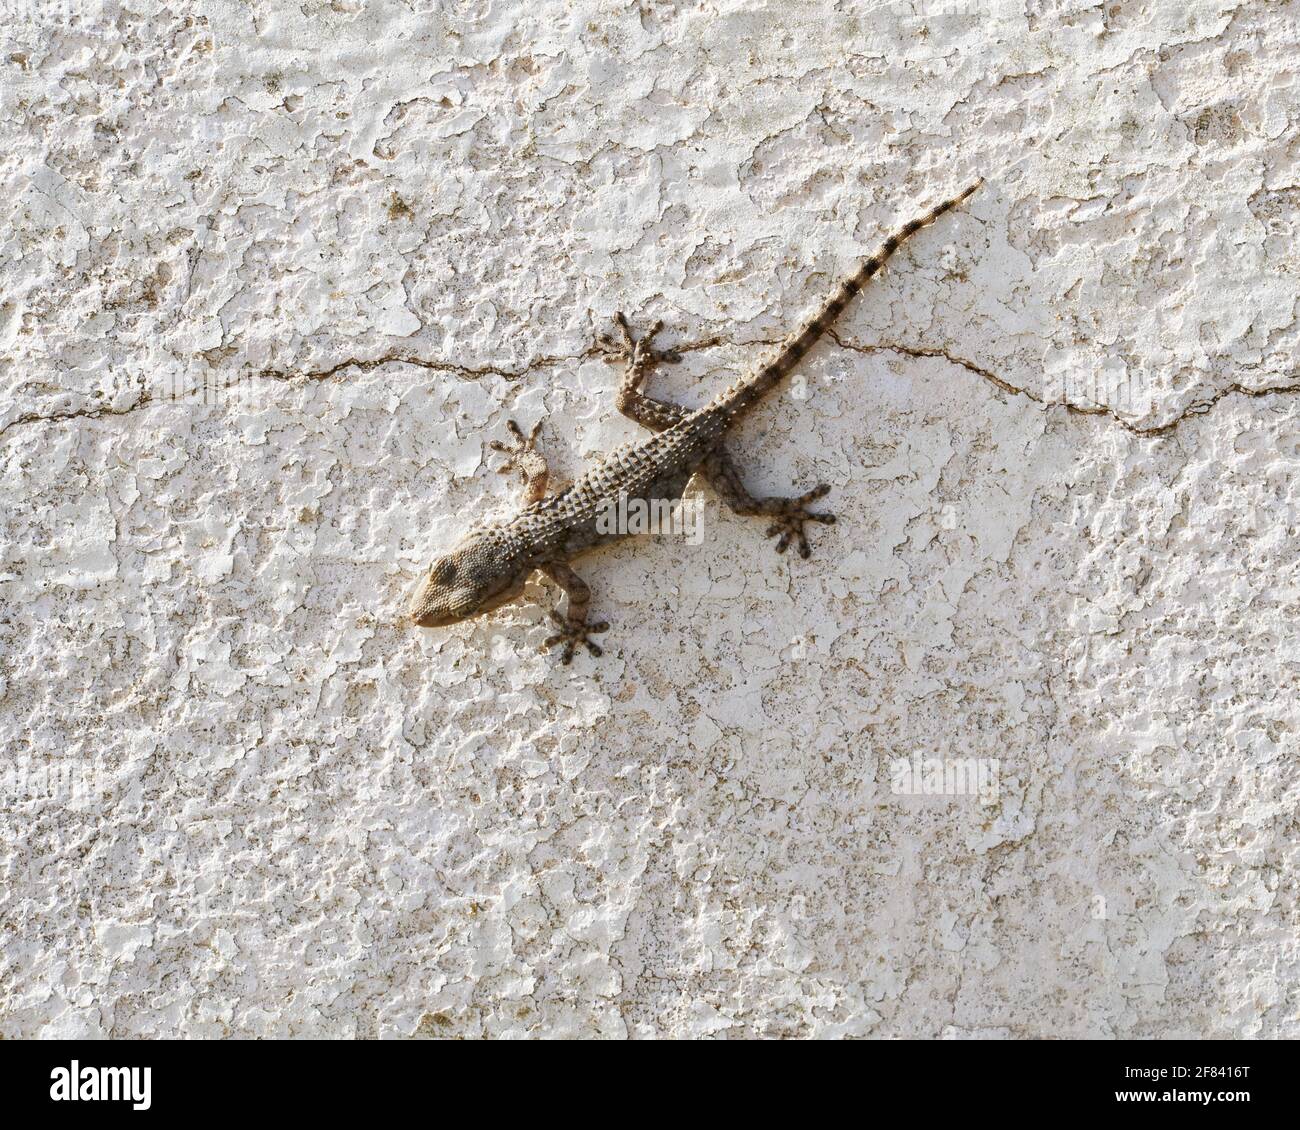 Lizard (Lepidodactylus lugubris, the mourning gecko) at a wall, Garraf, Catalonia, Spain Stock Photo